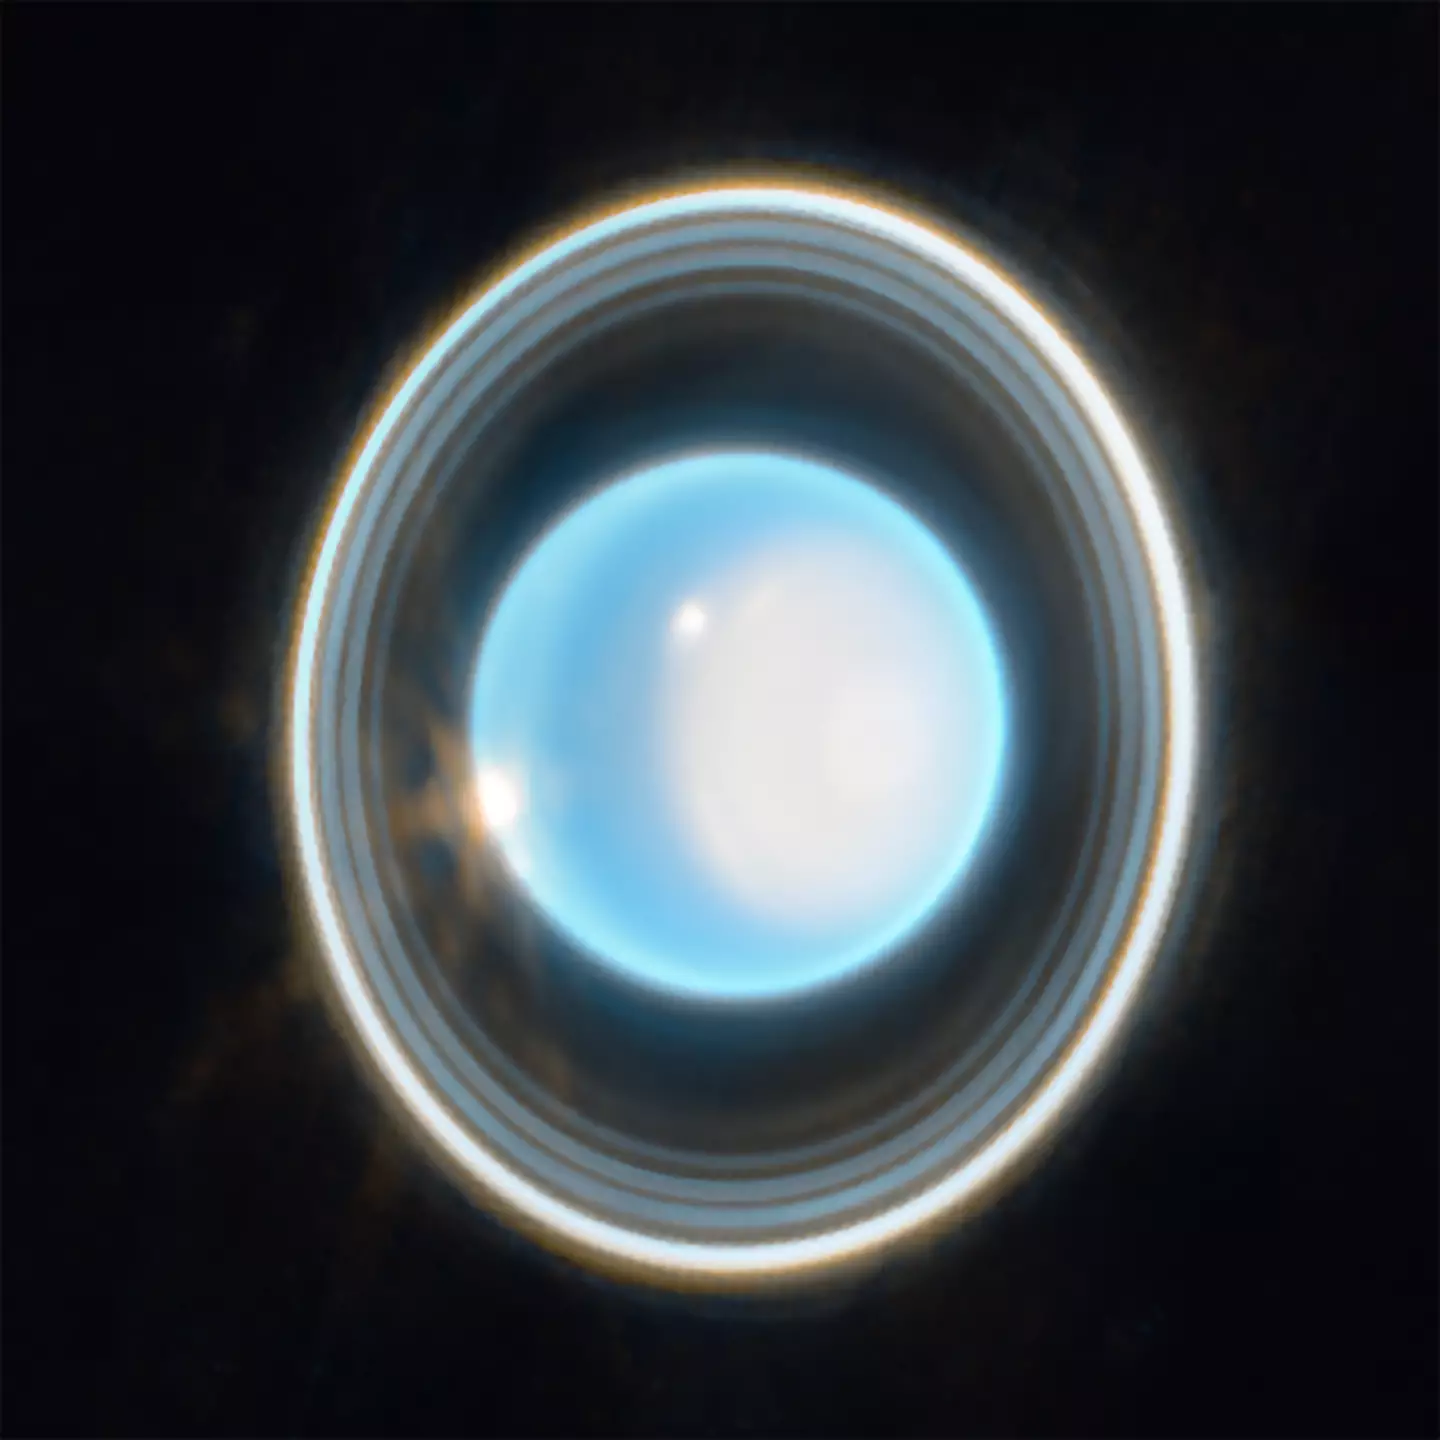 The new image of Uranus.